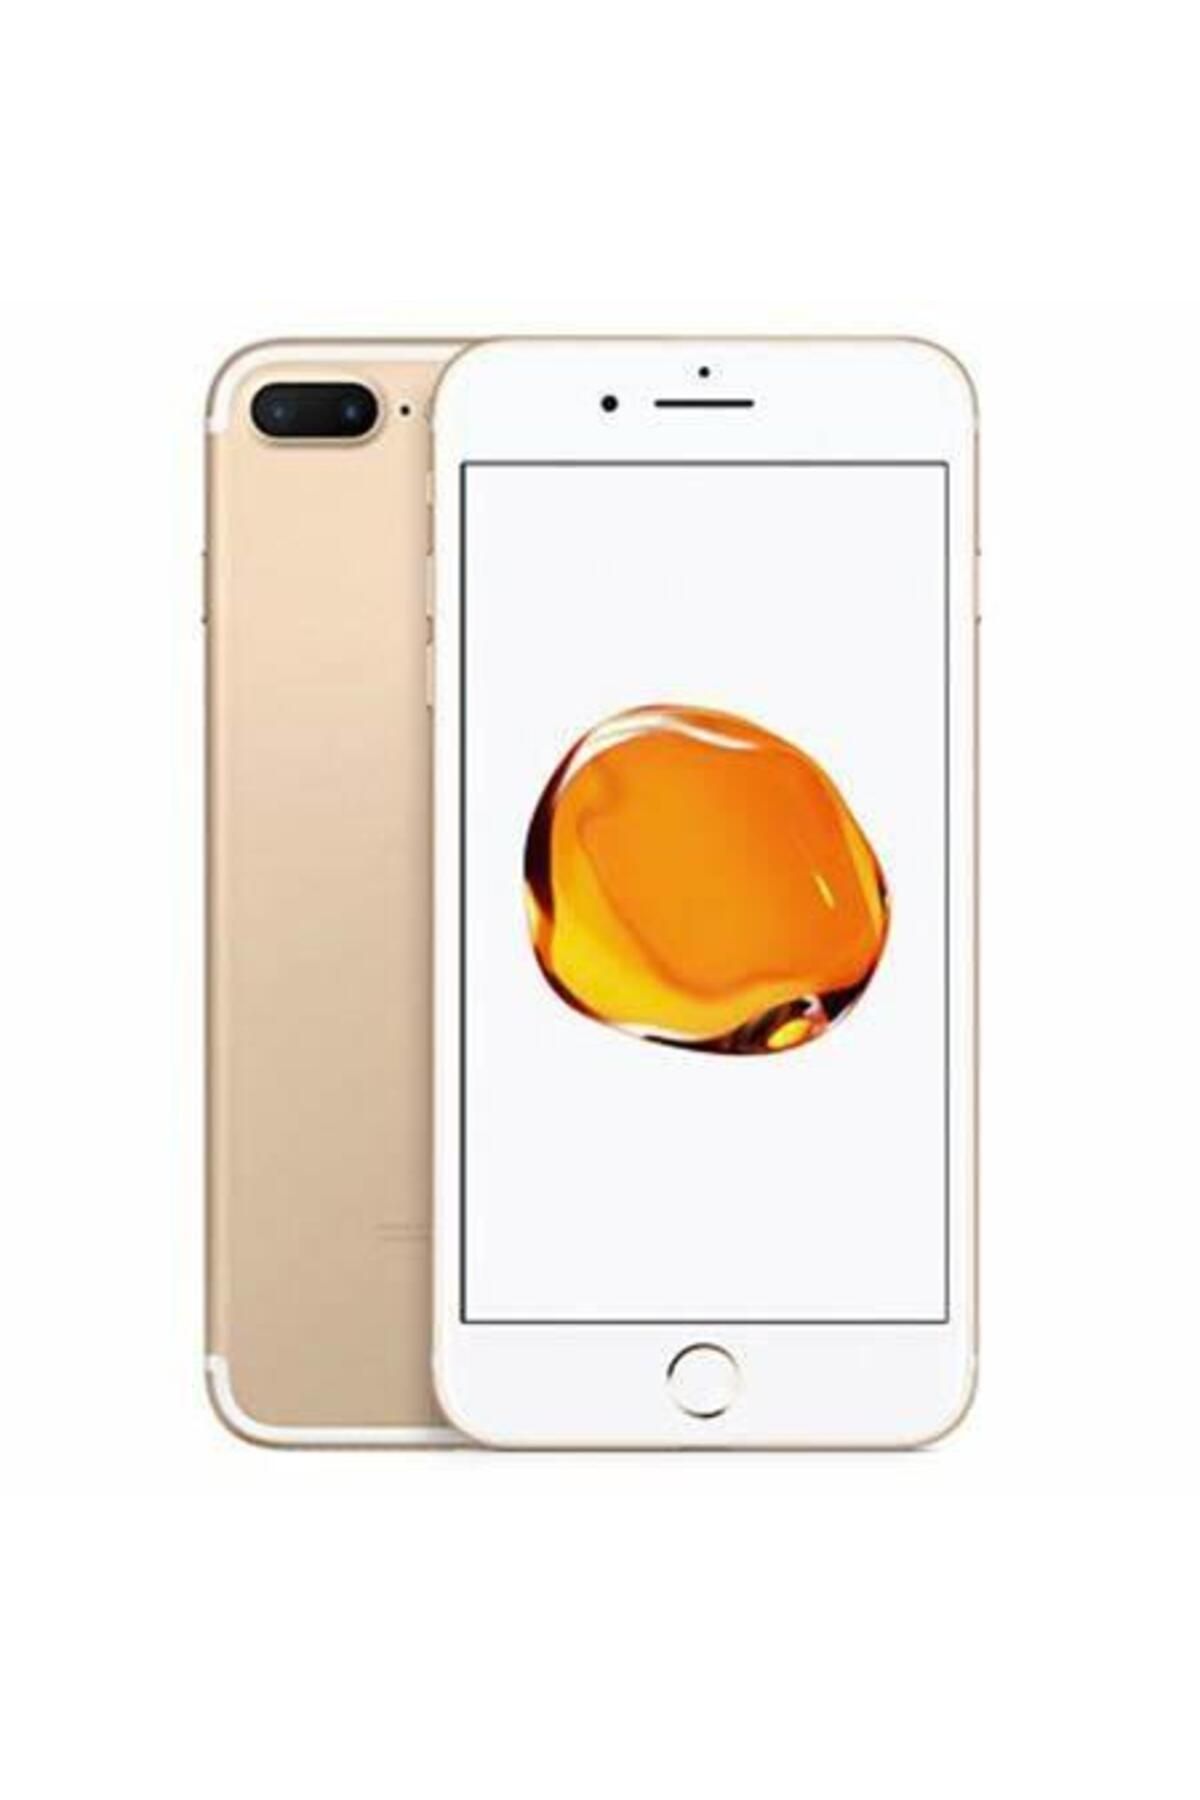 Apple Yenilenmiş iPhone 7 Plus Rose Gold 32 GB B Kalite (12 Ay Garantili)